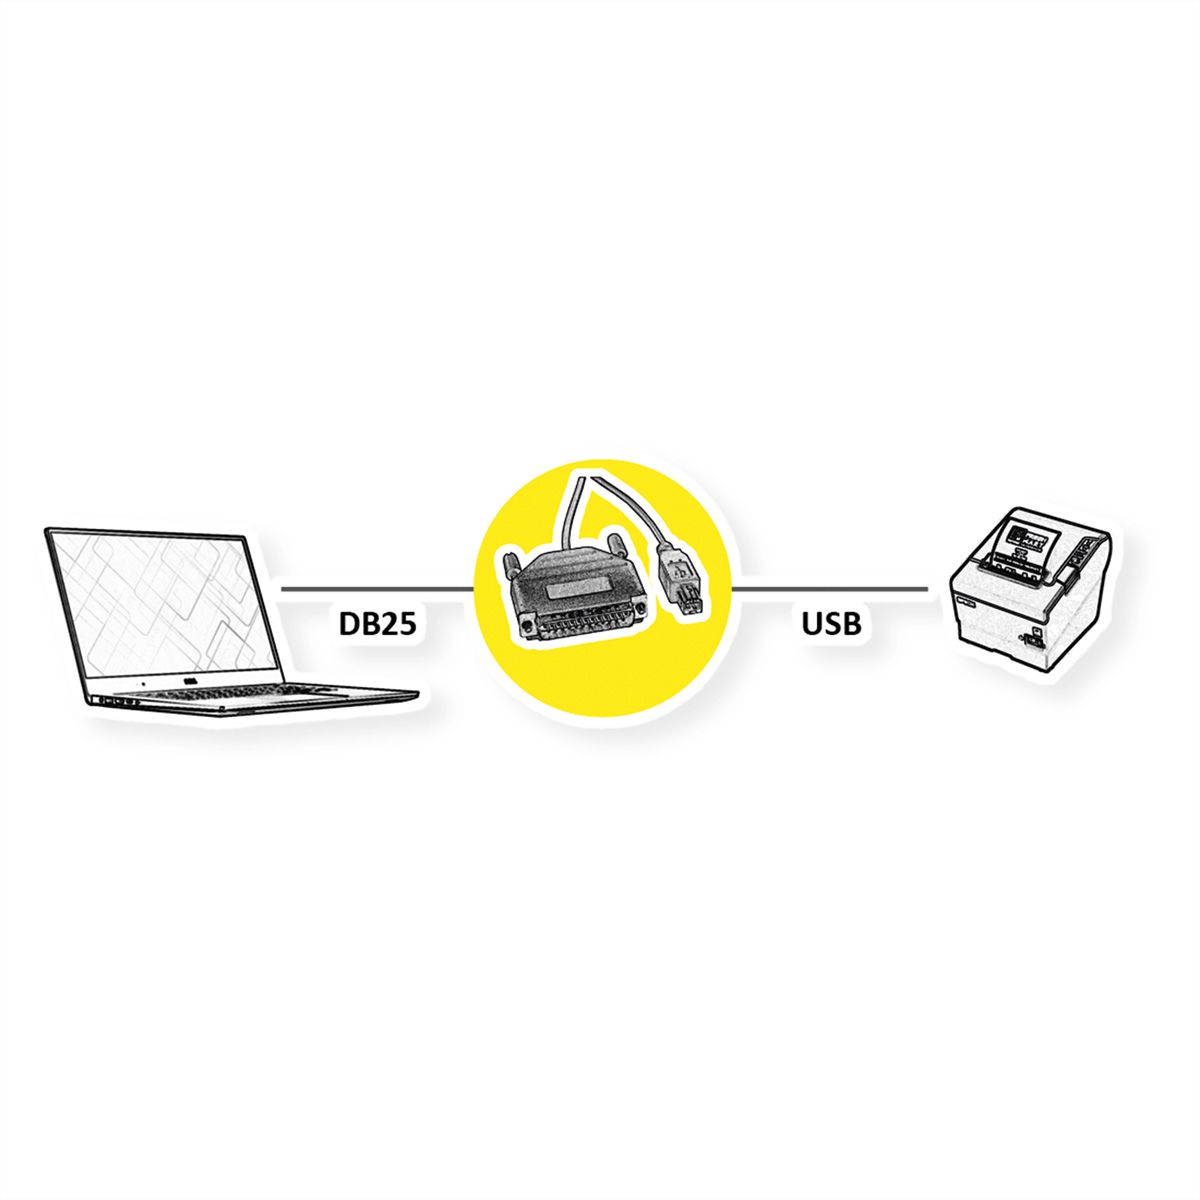 oorsprong Dwang zelf Converter kabel parallel naar USB - SECOMP Nederland GmbH